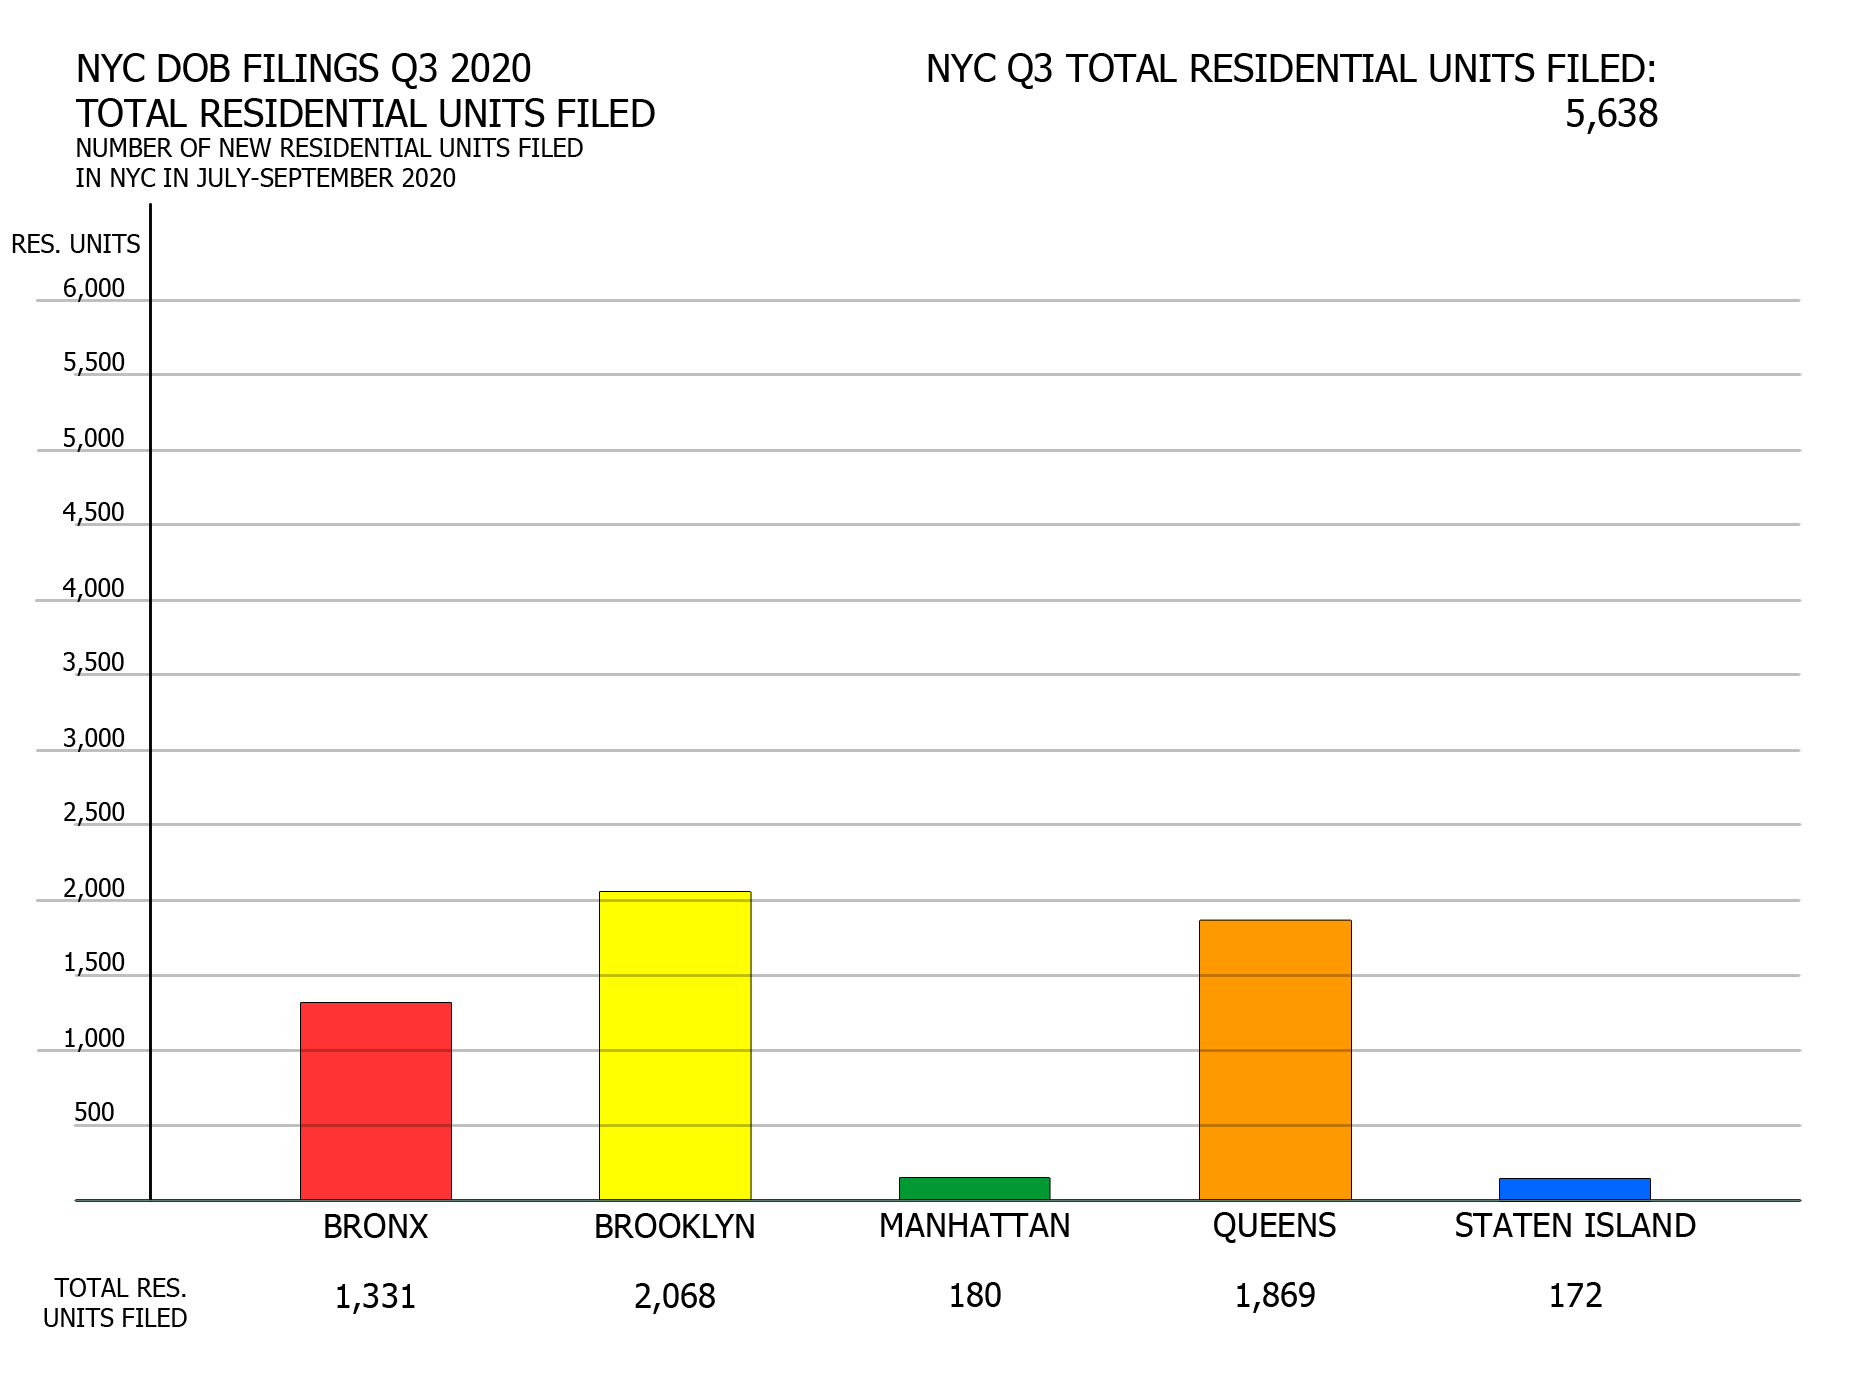 NYC DOB filings in Q3 2020 by total unit count per borough. Credit: Vitali Ogorodnikov